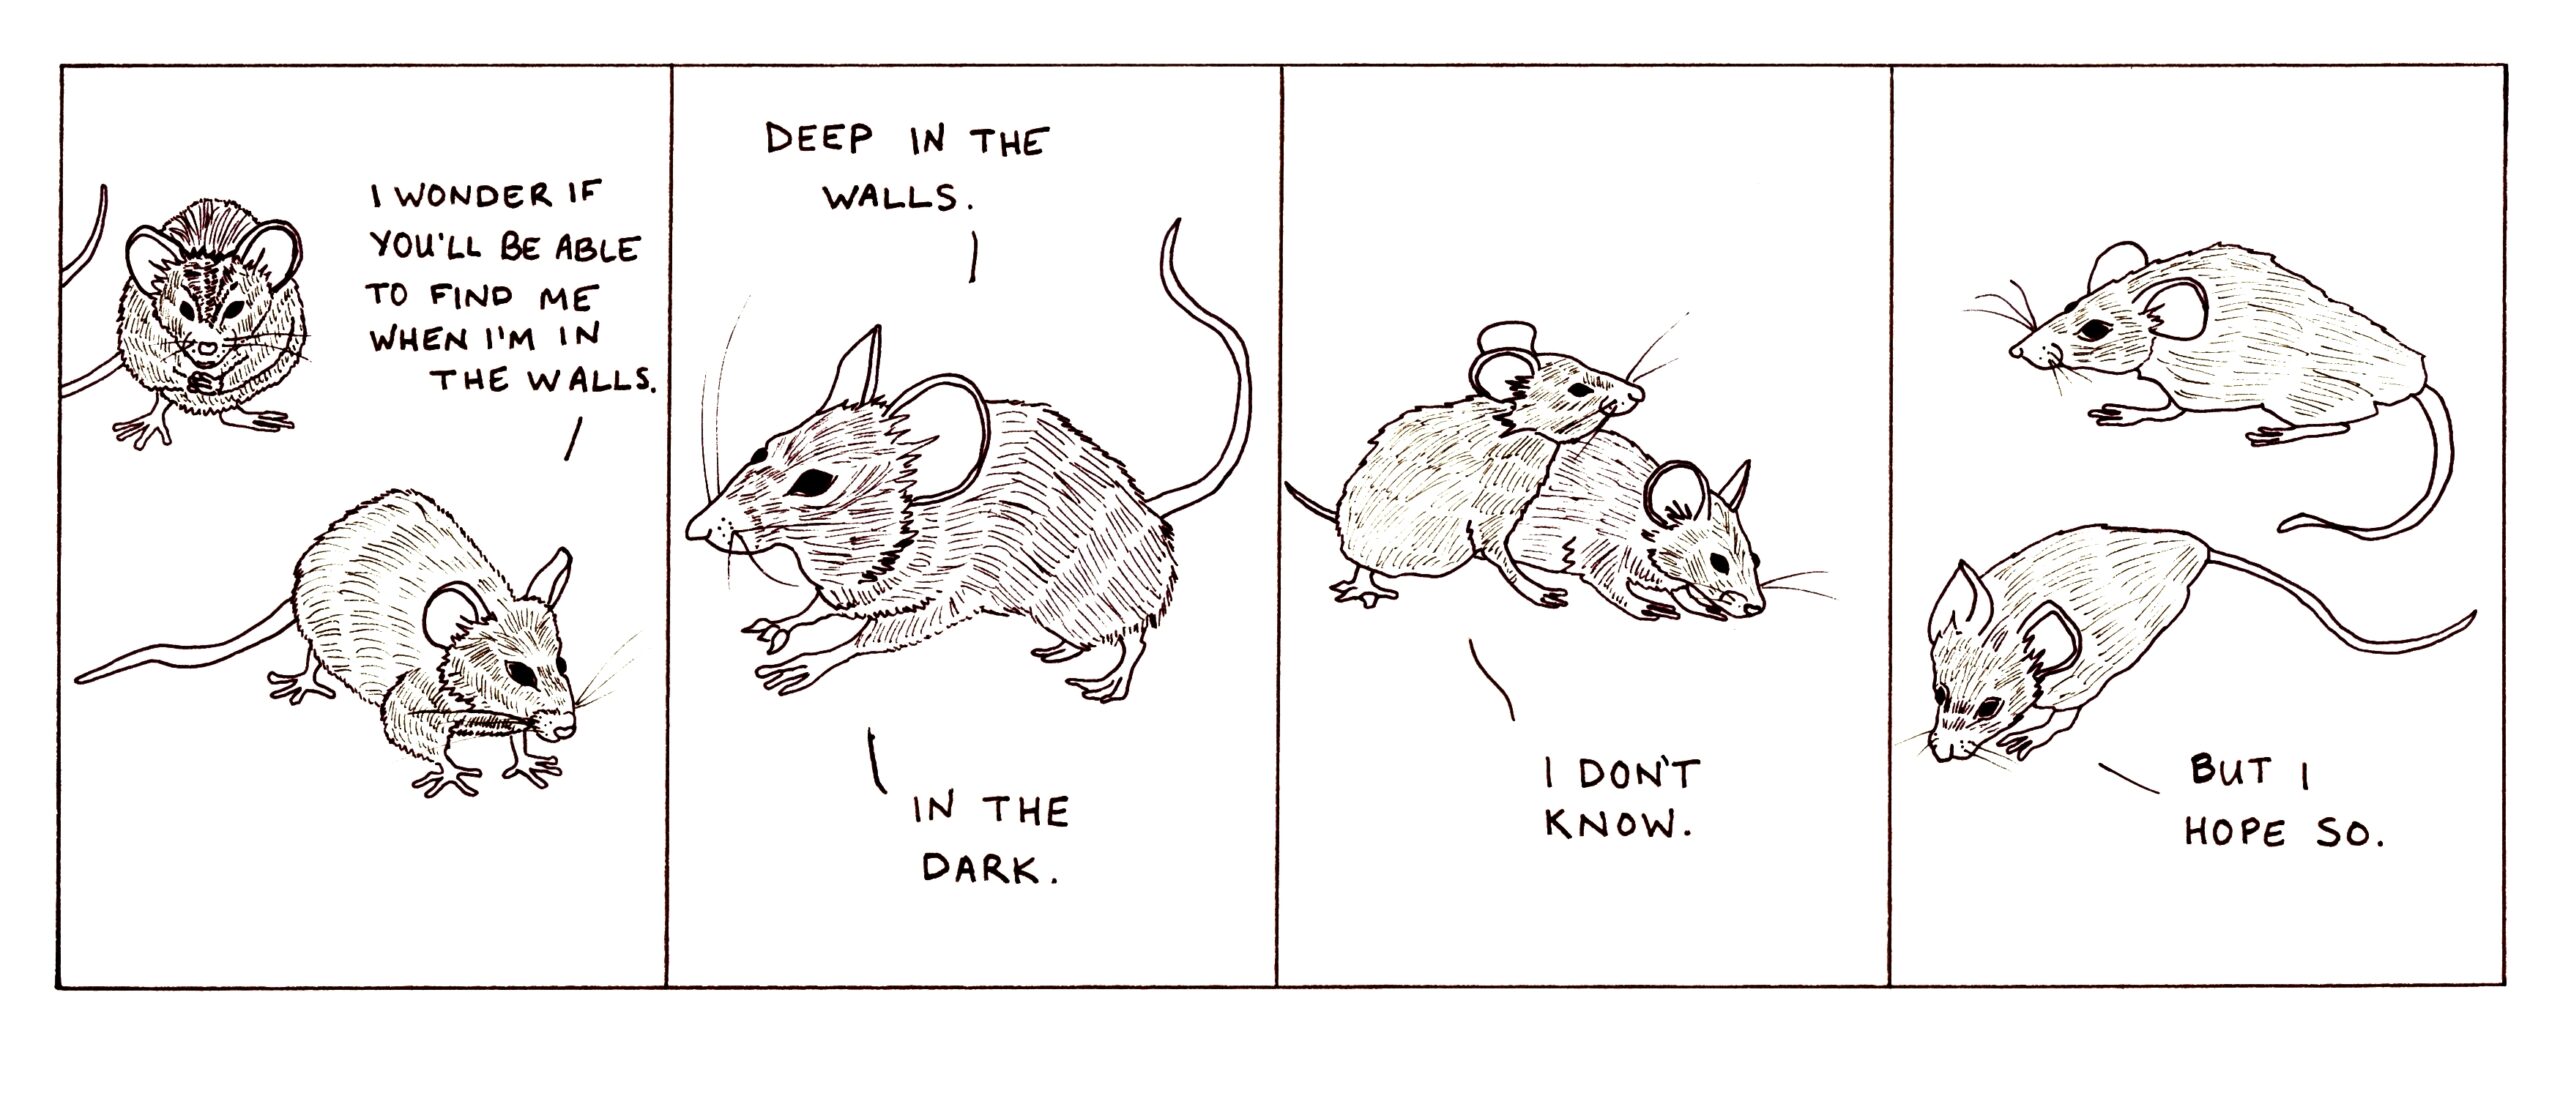 Sad mouse comics